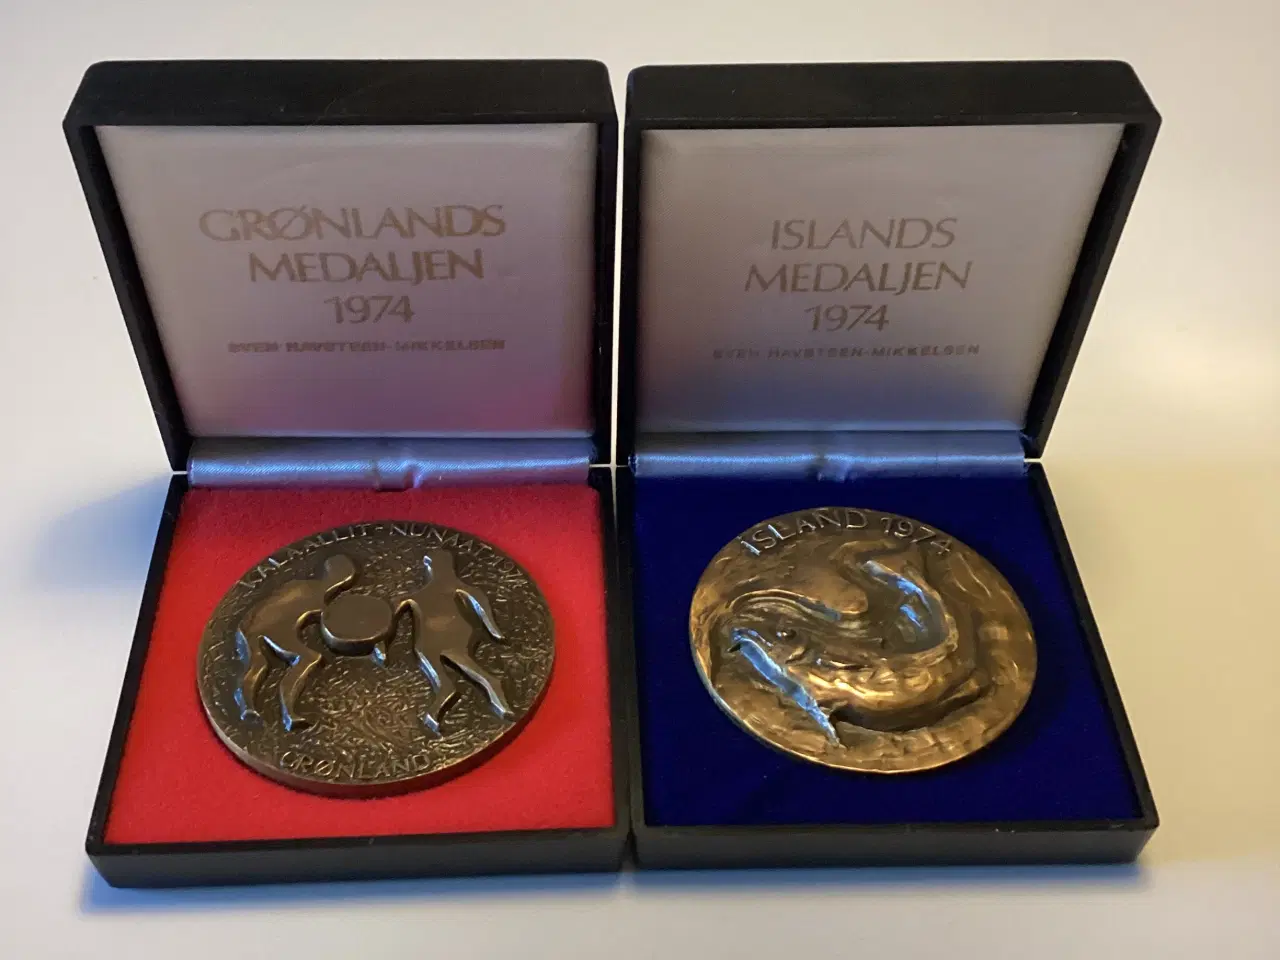 Billede 1 - Grønlands/Islands medaljen 1974